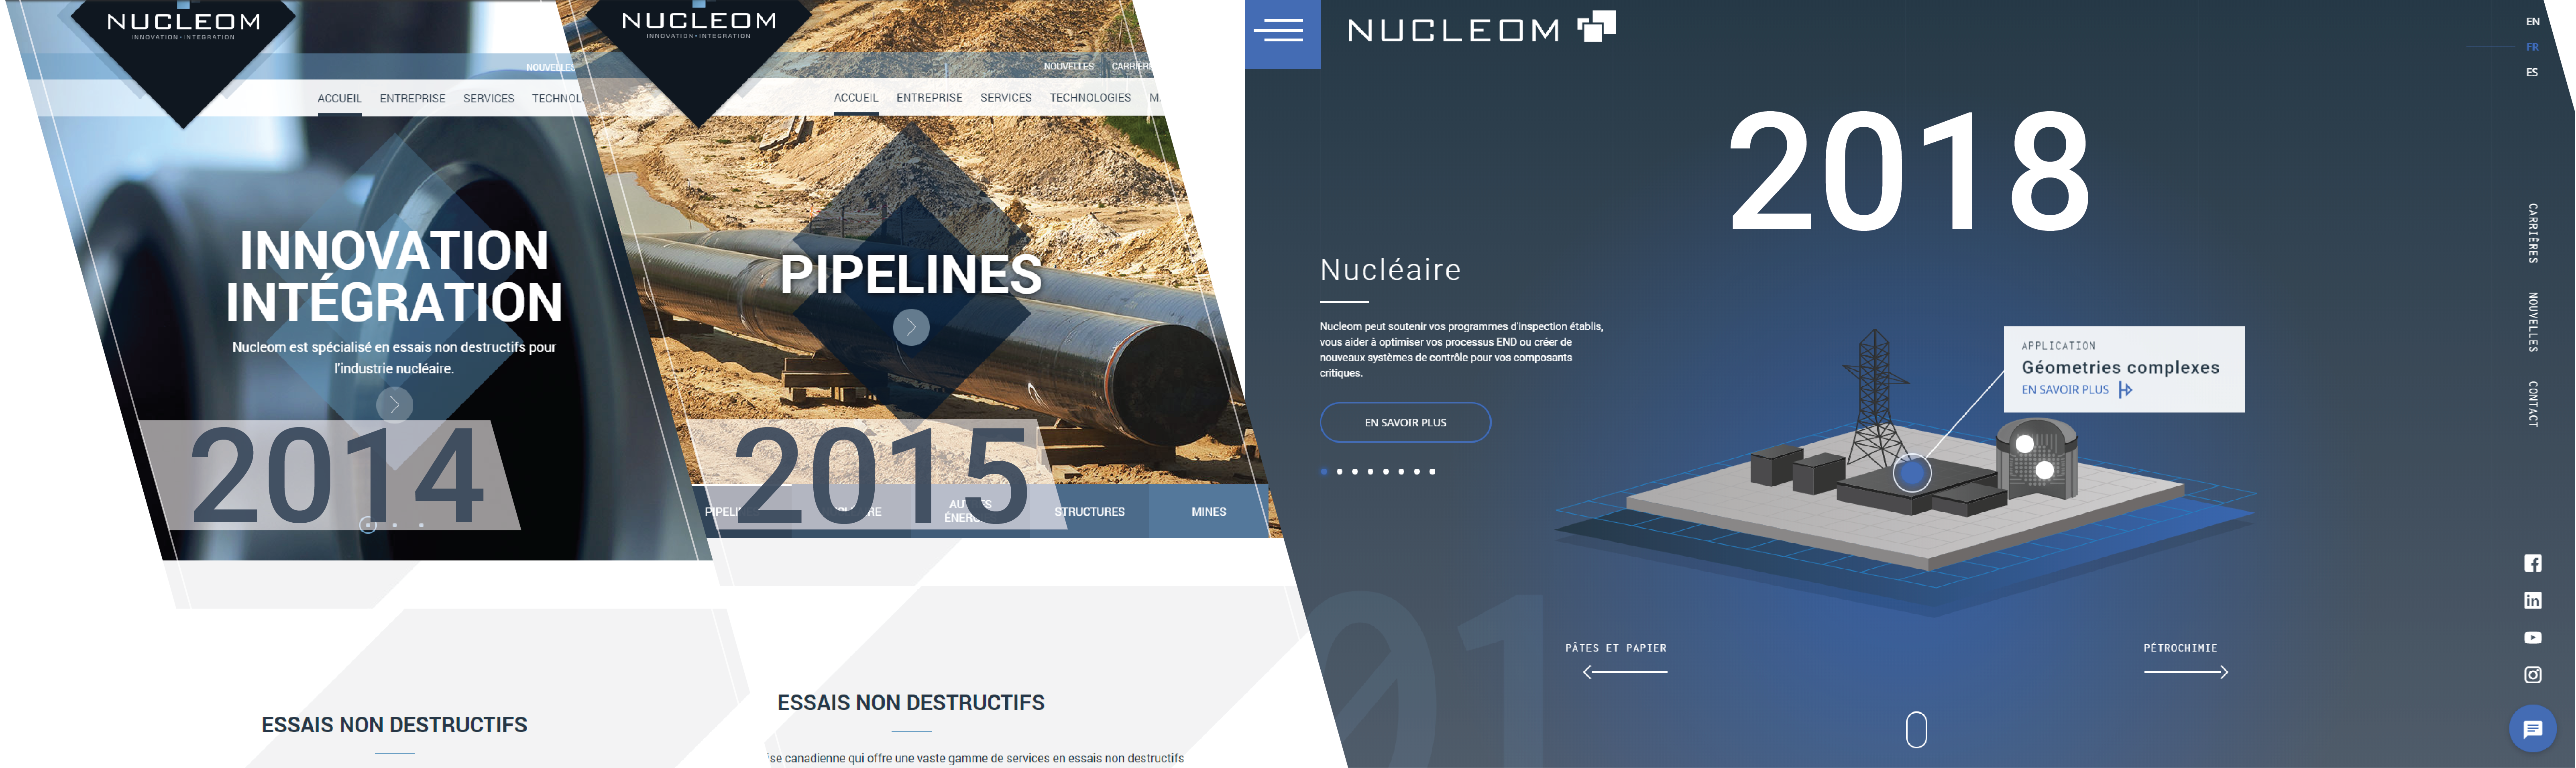 New Website Nucleom